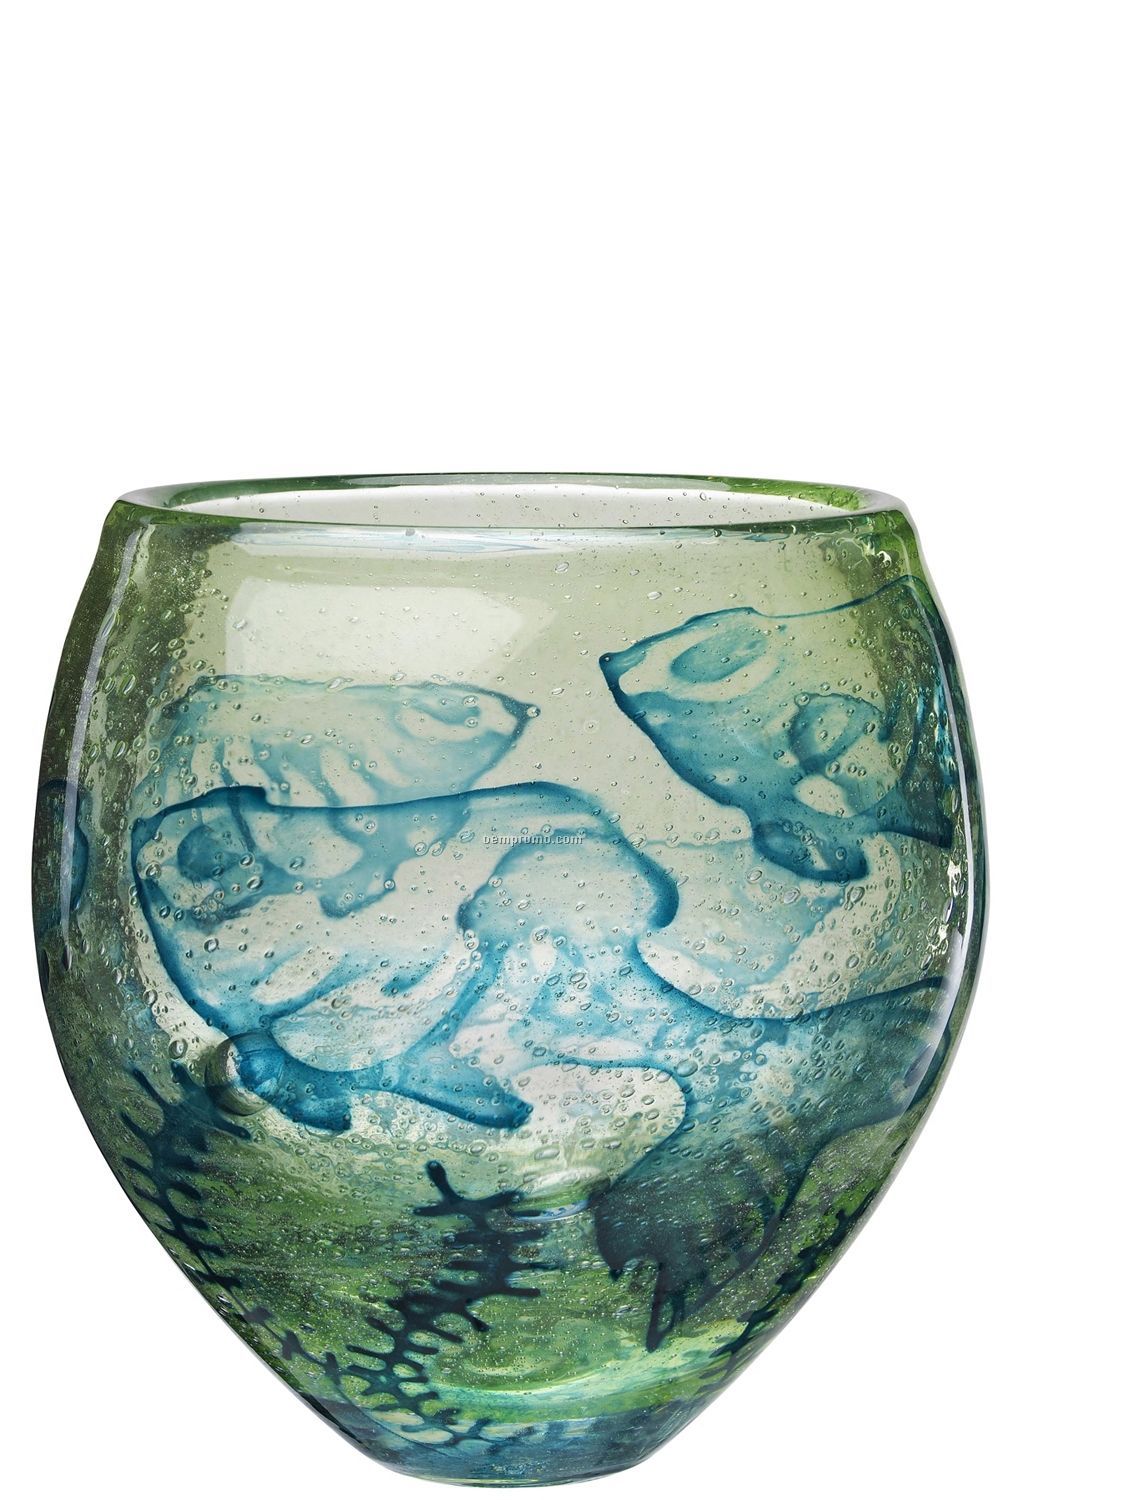 Underworld Green Glass Vase W/ Fish Motif By Olle Brozen